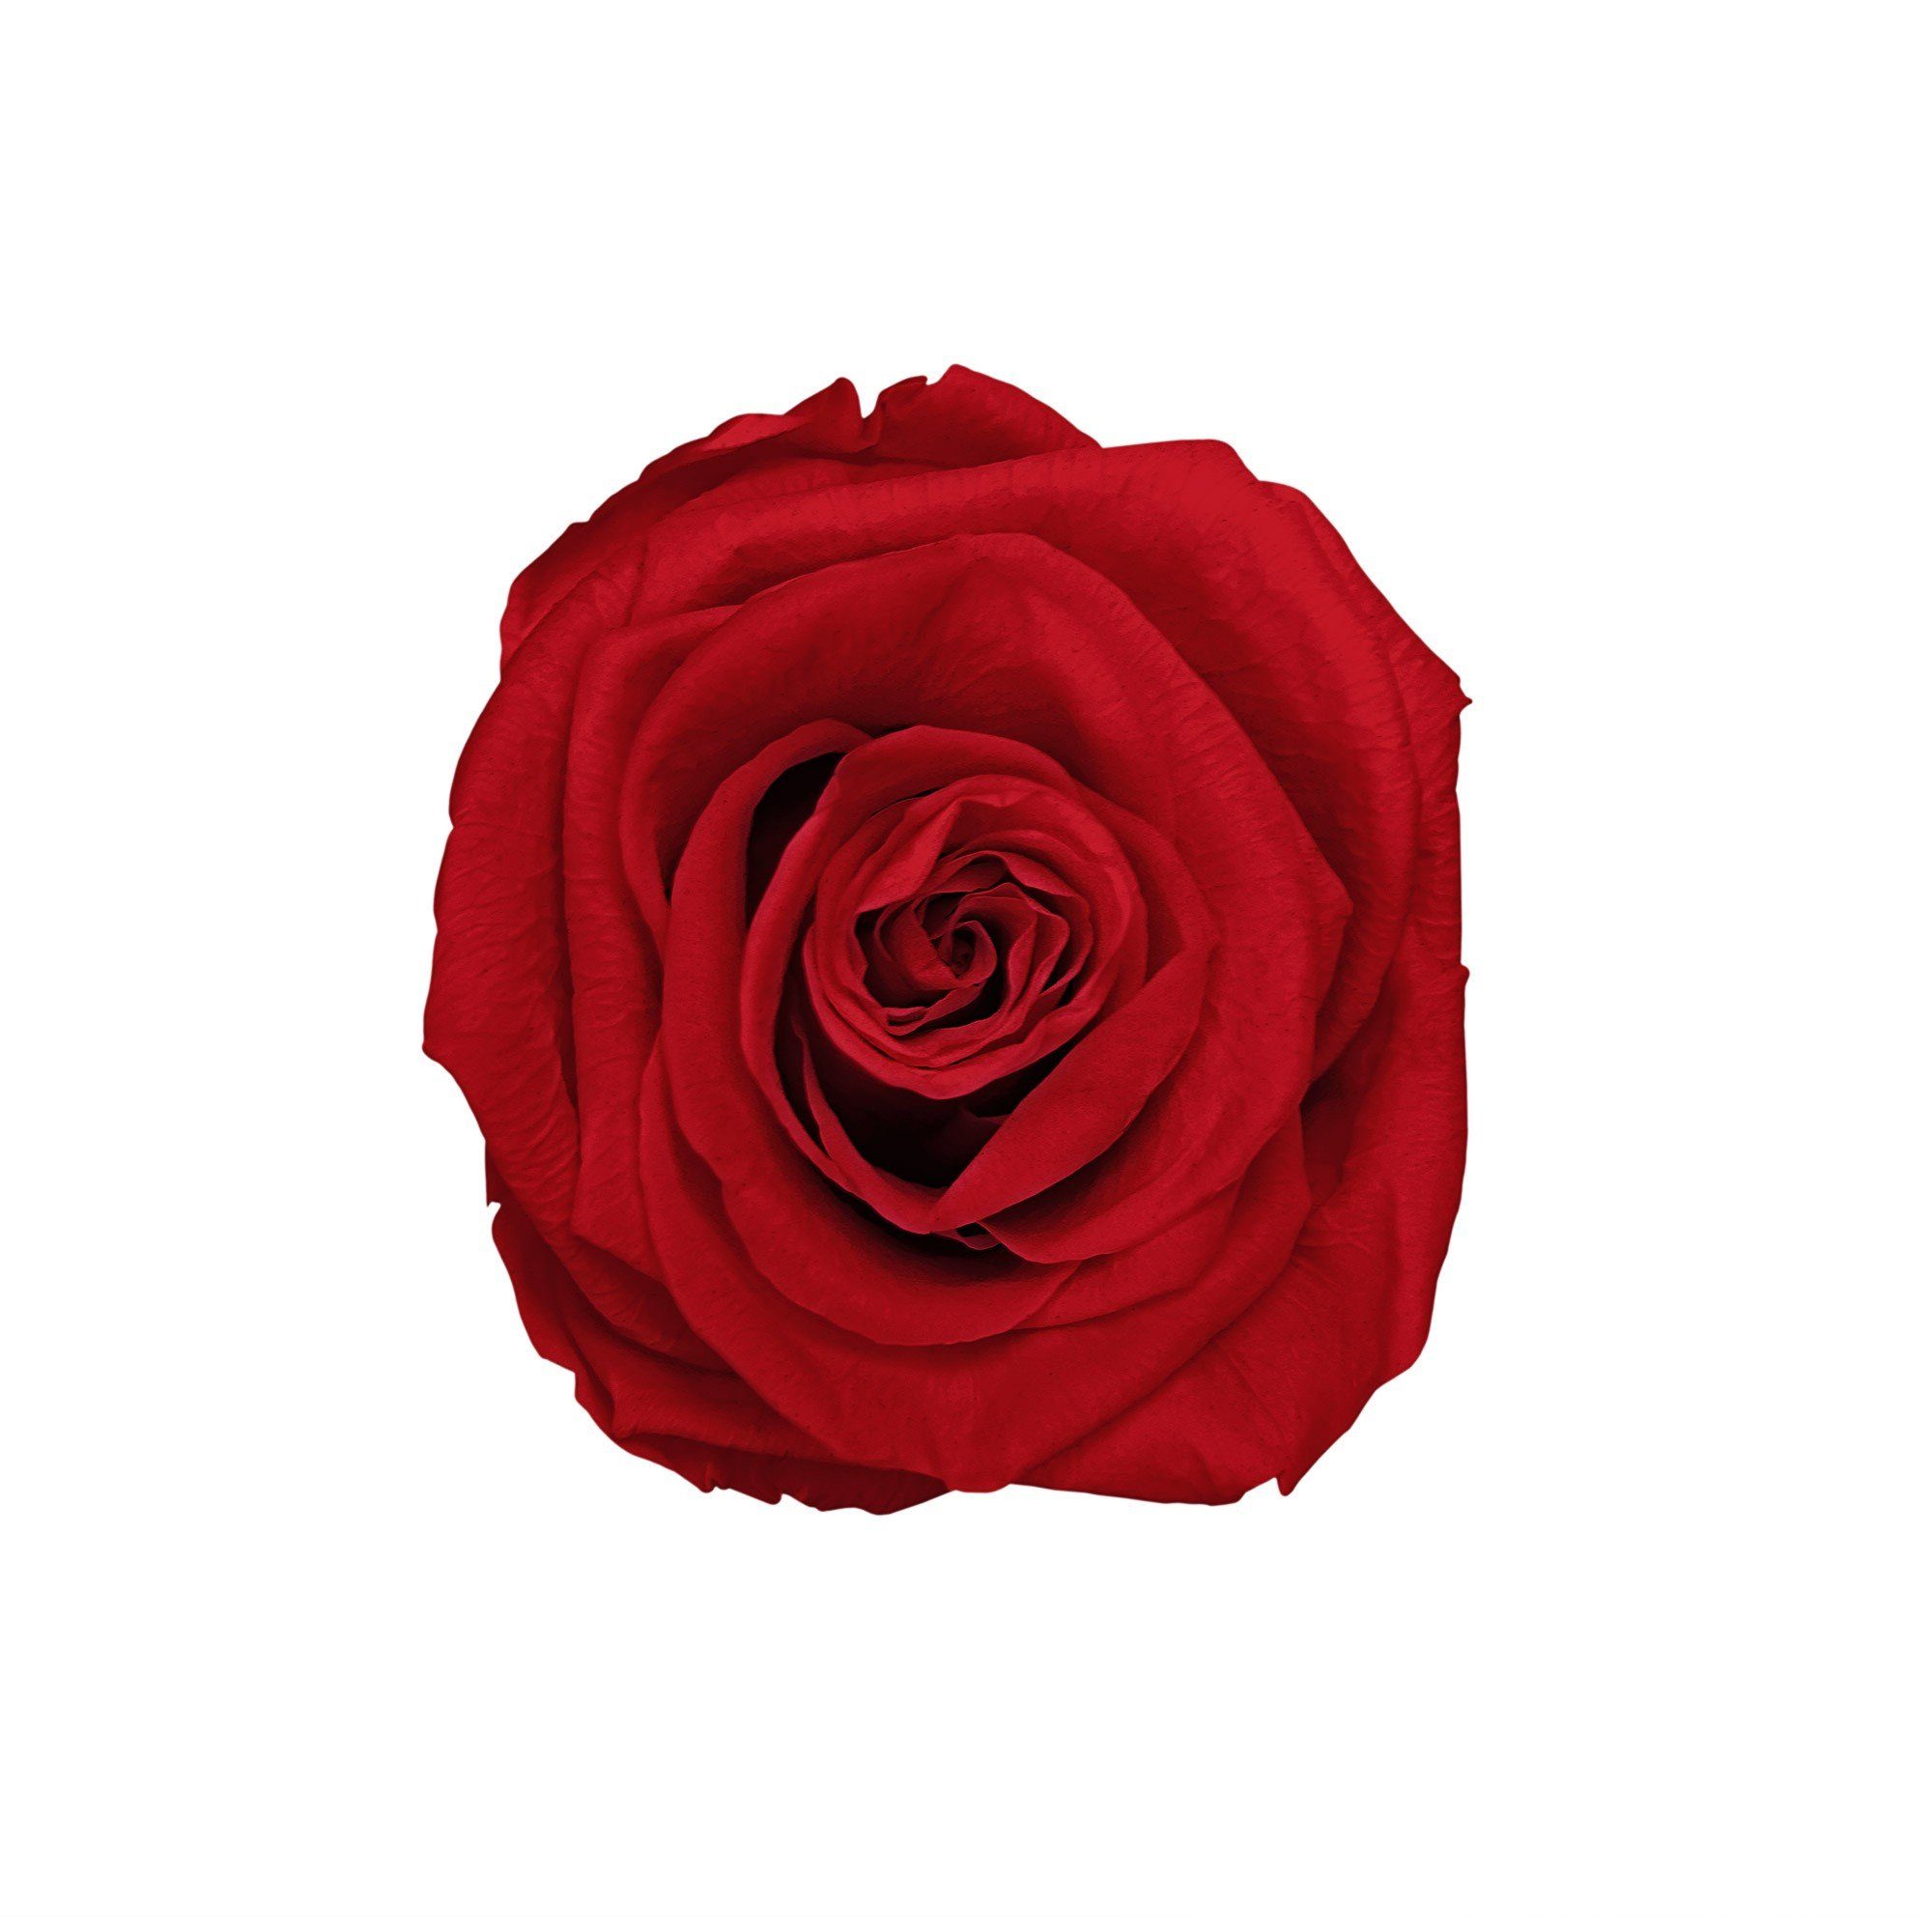 Kunstblume Eckige Rosenbox in Flowers, Blumen Infinity Rose Red 1er Höhe Rose, Heritage Jahre 9 Infinity Richter by cm mit konservierte 3 I duftende I Echte, haltbar I Holy weiß Raul